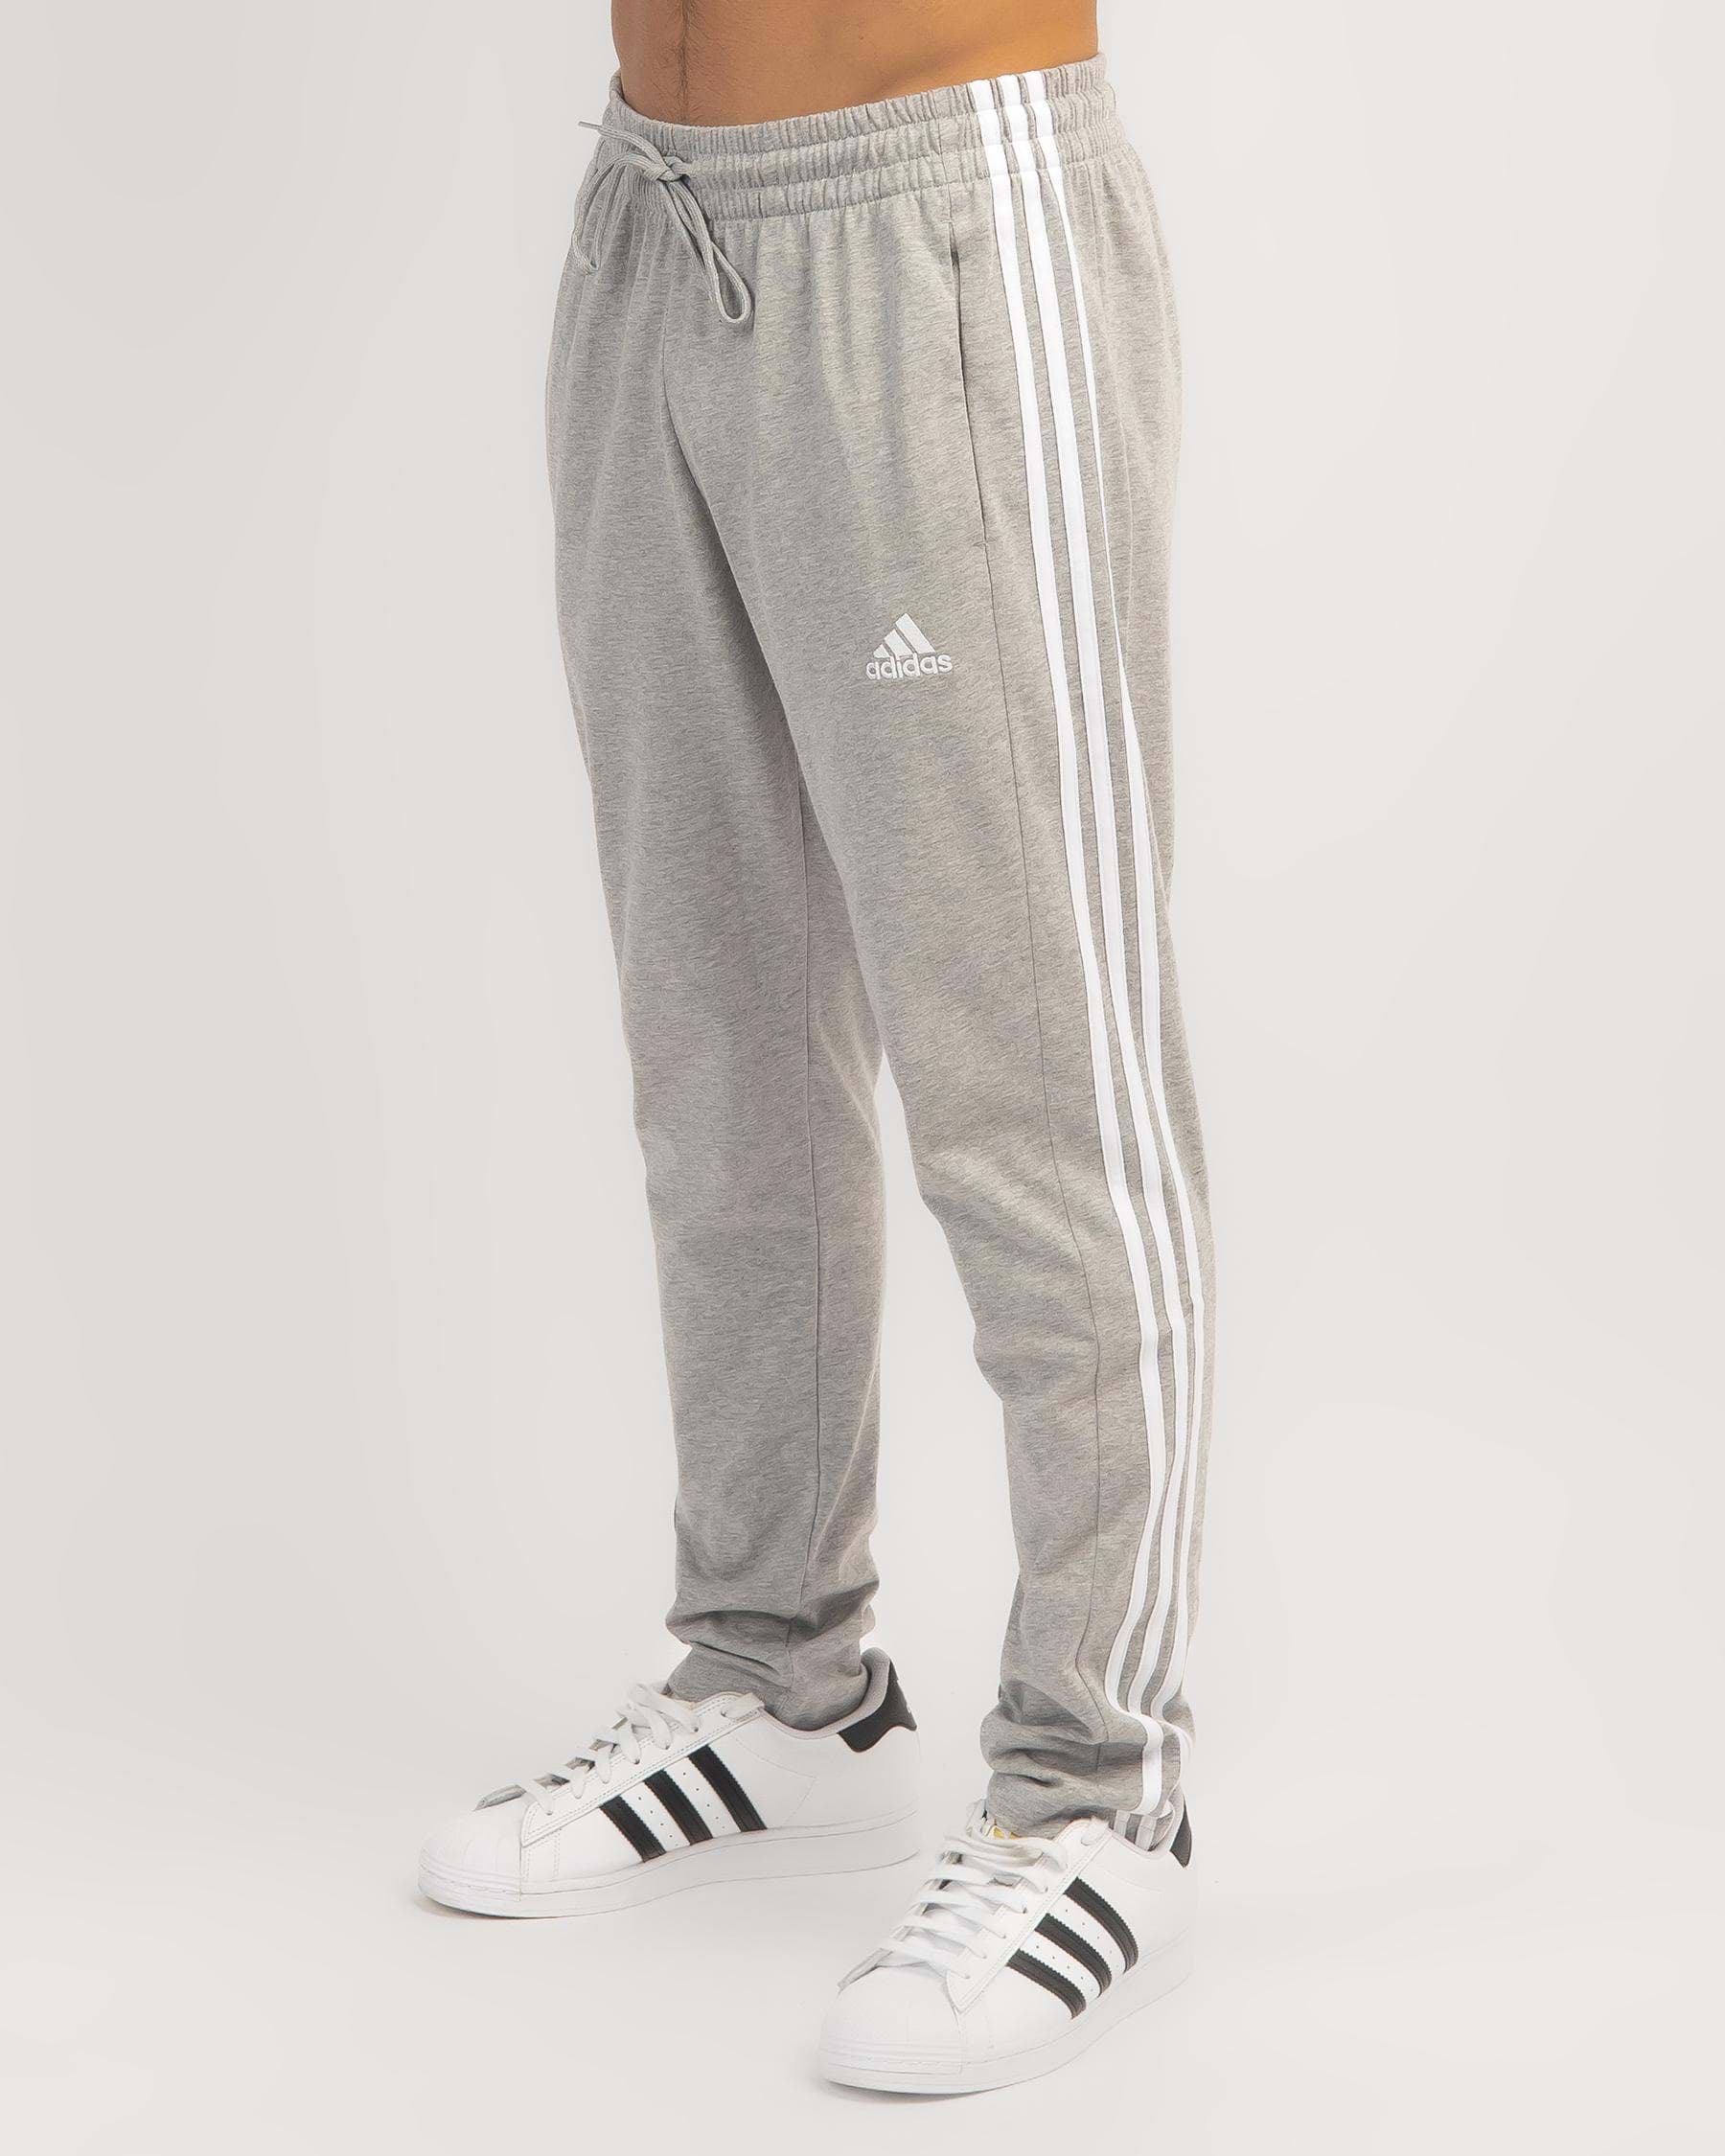 Adidas 3 Stripe Track Pants In Medium Grey Heather/white - Fast ...